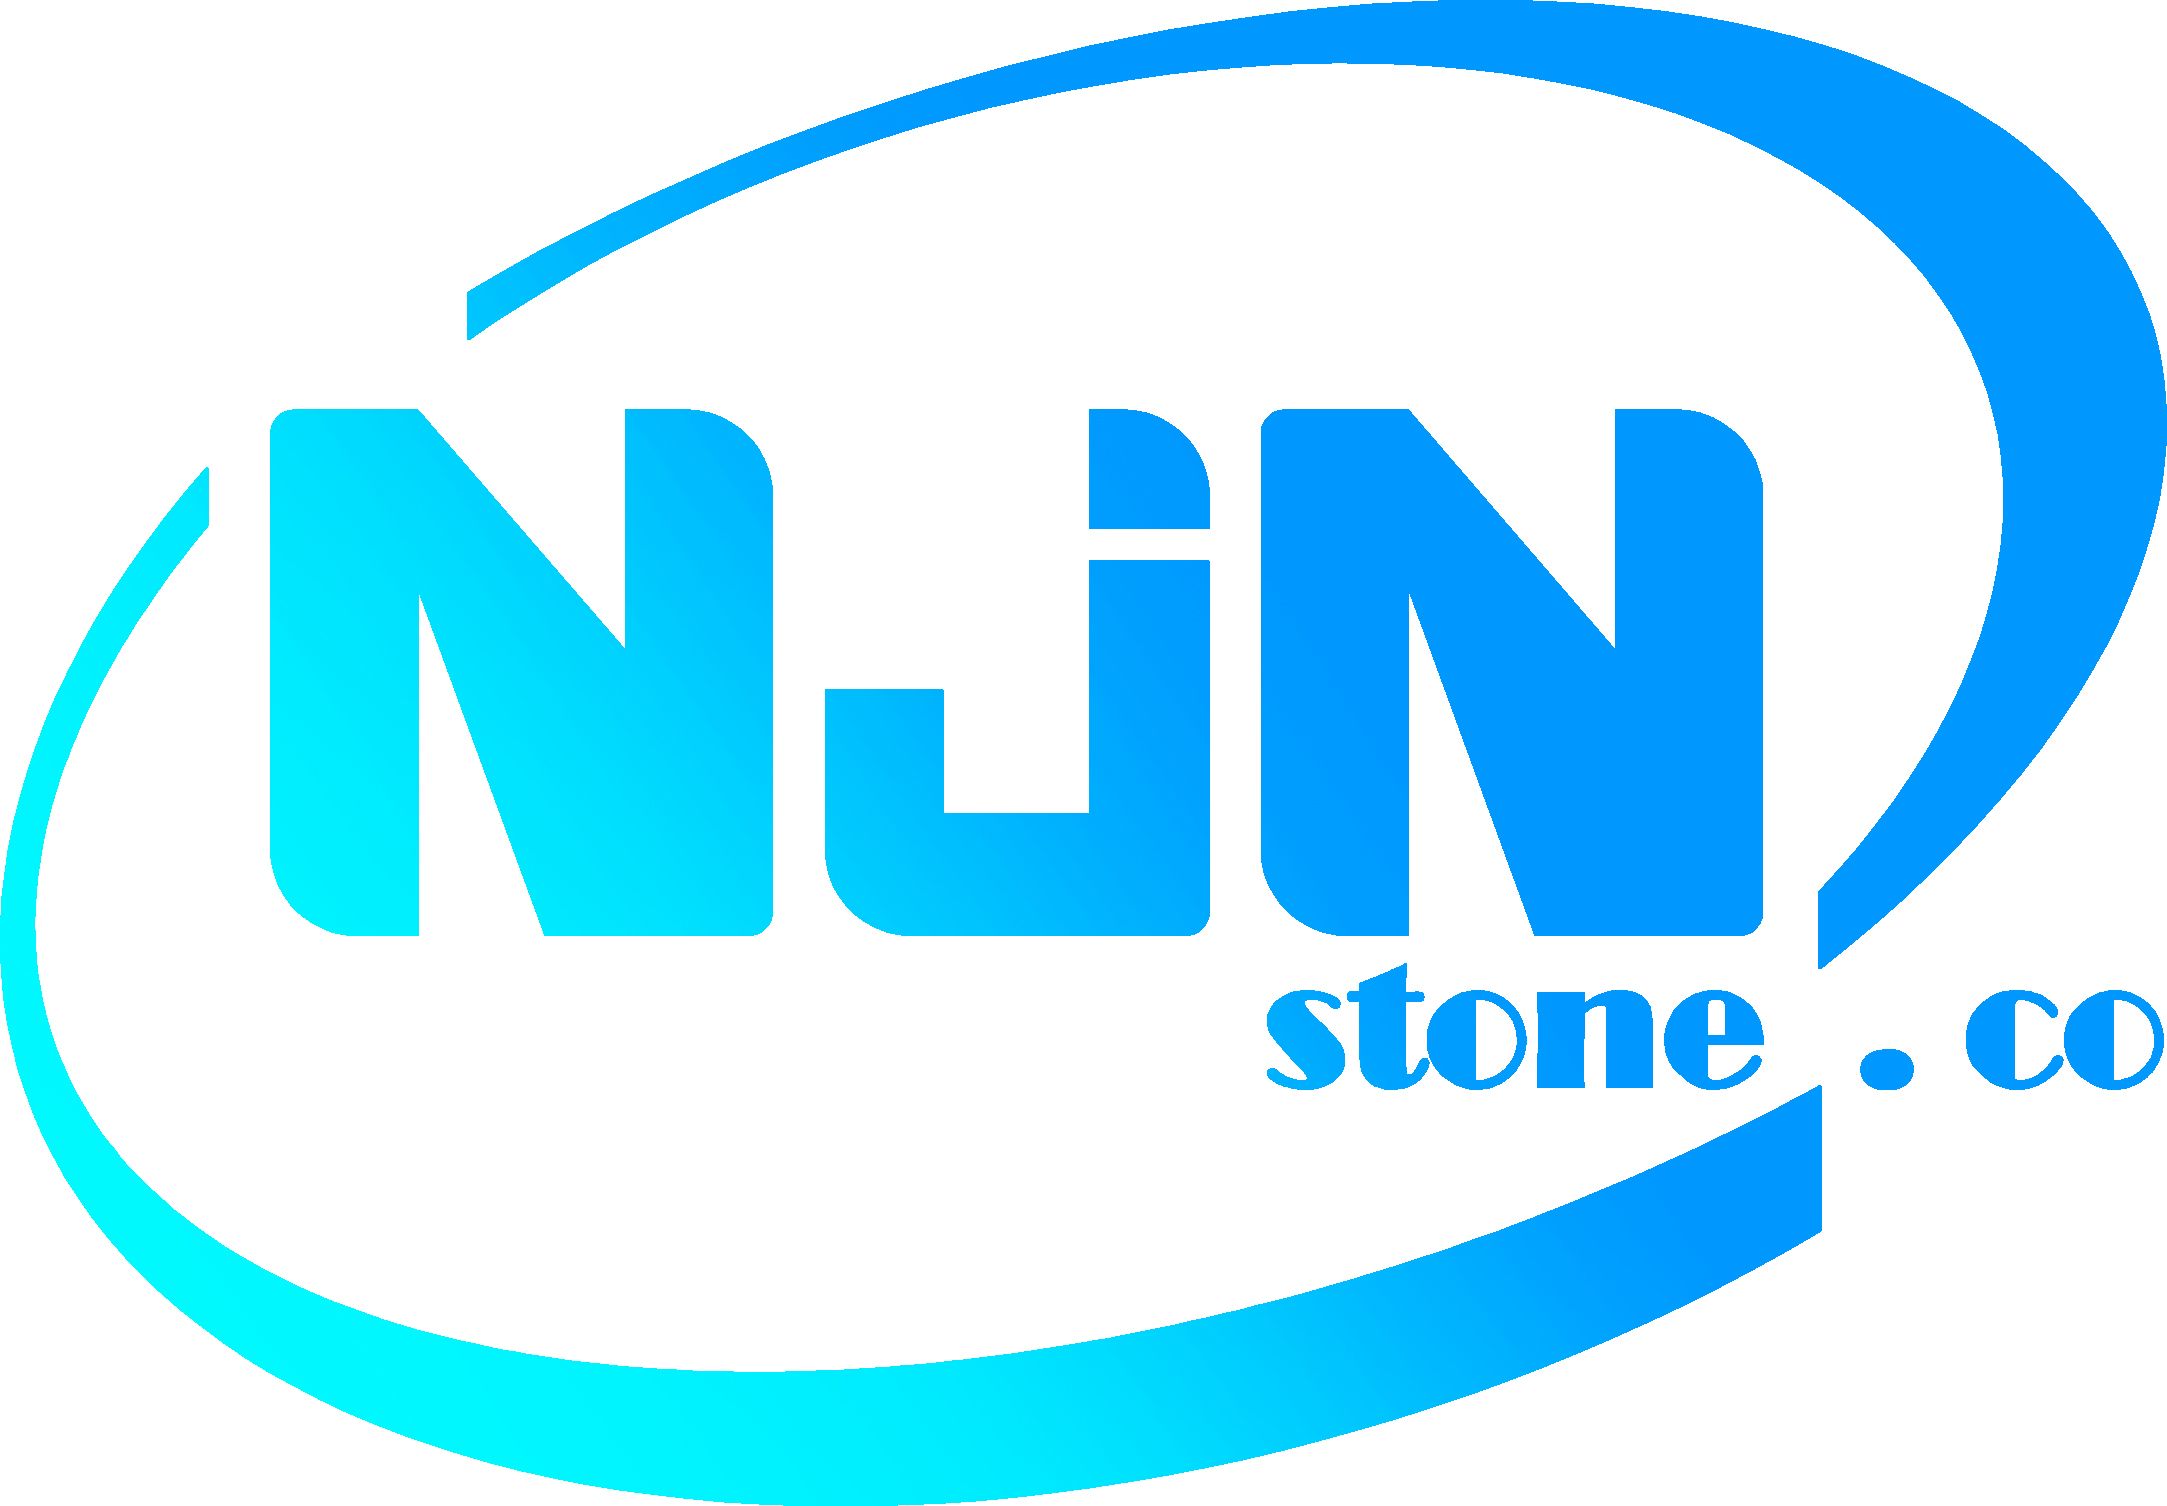 NJN- Naghshe Jahan Stone Co.